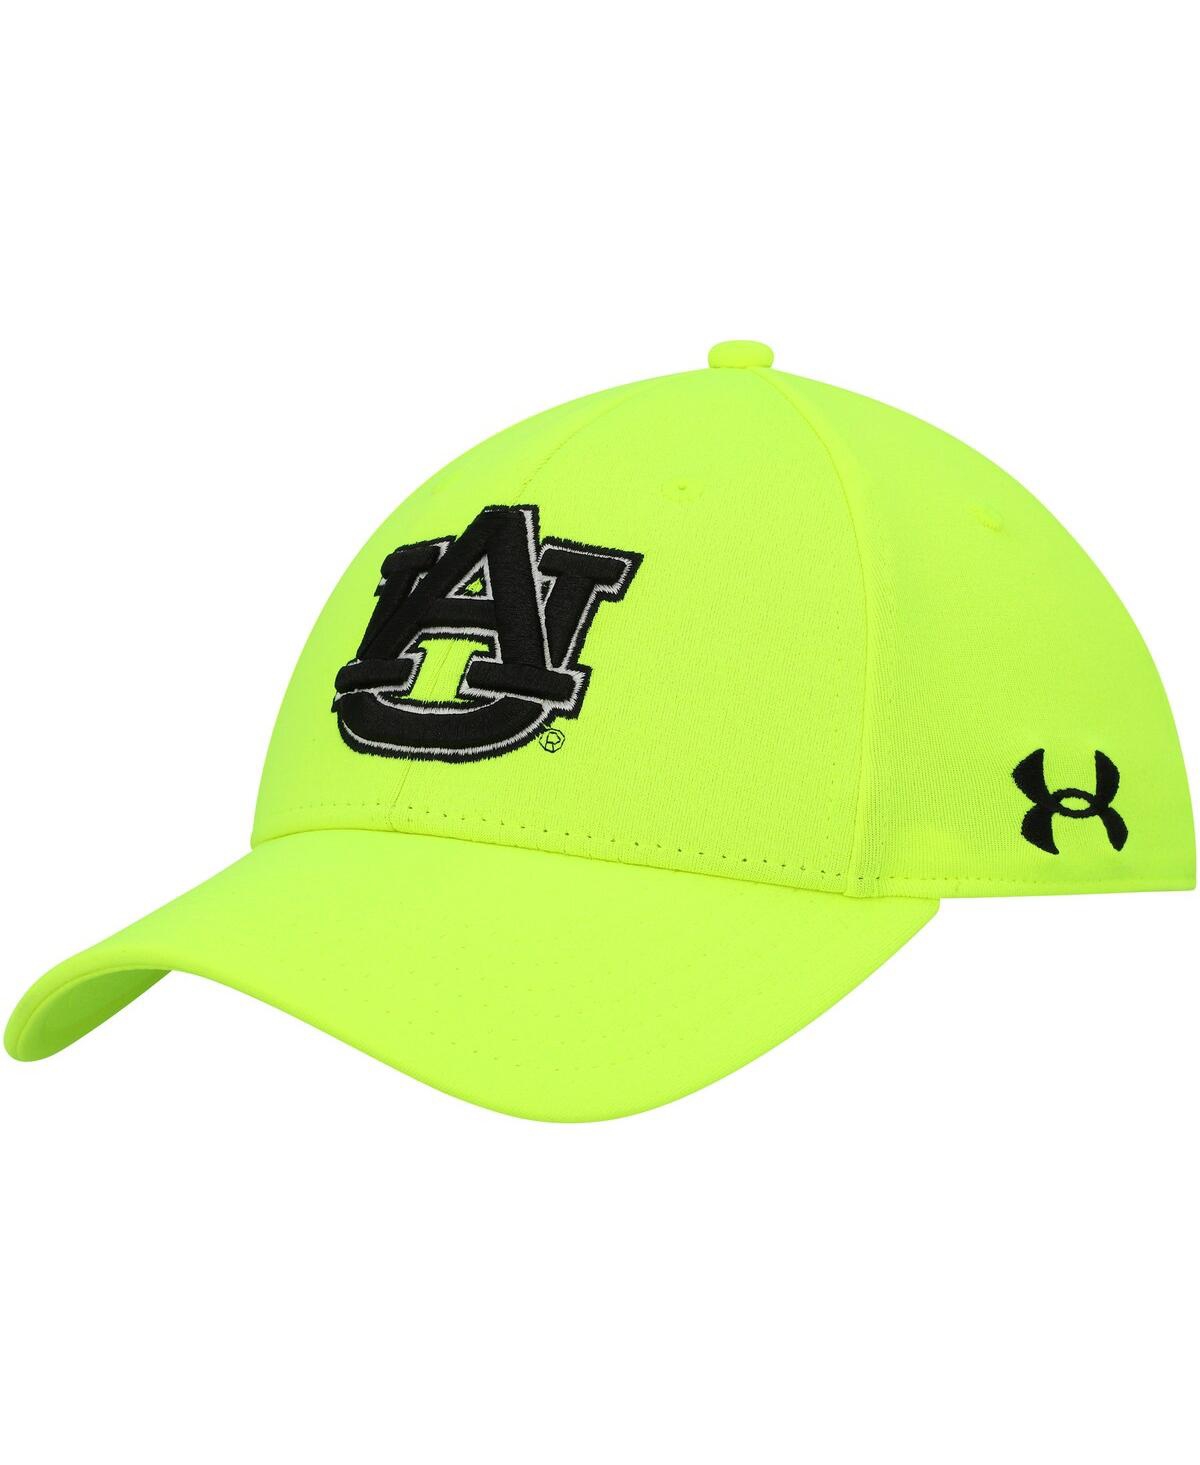 Under Armour Men's  Yellow Auburn Tigers Signal Caller Performance Adjustable Hat